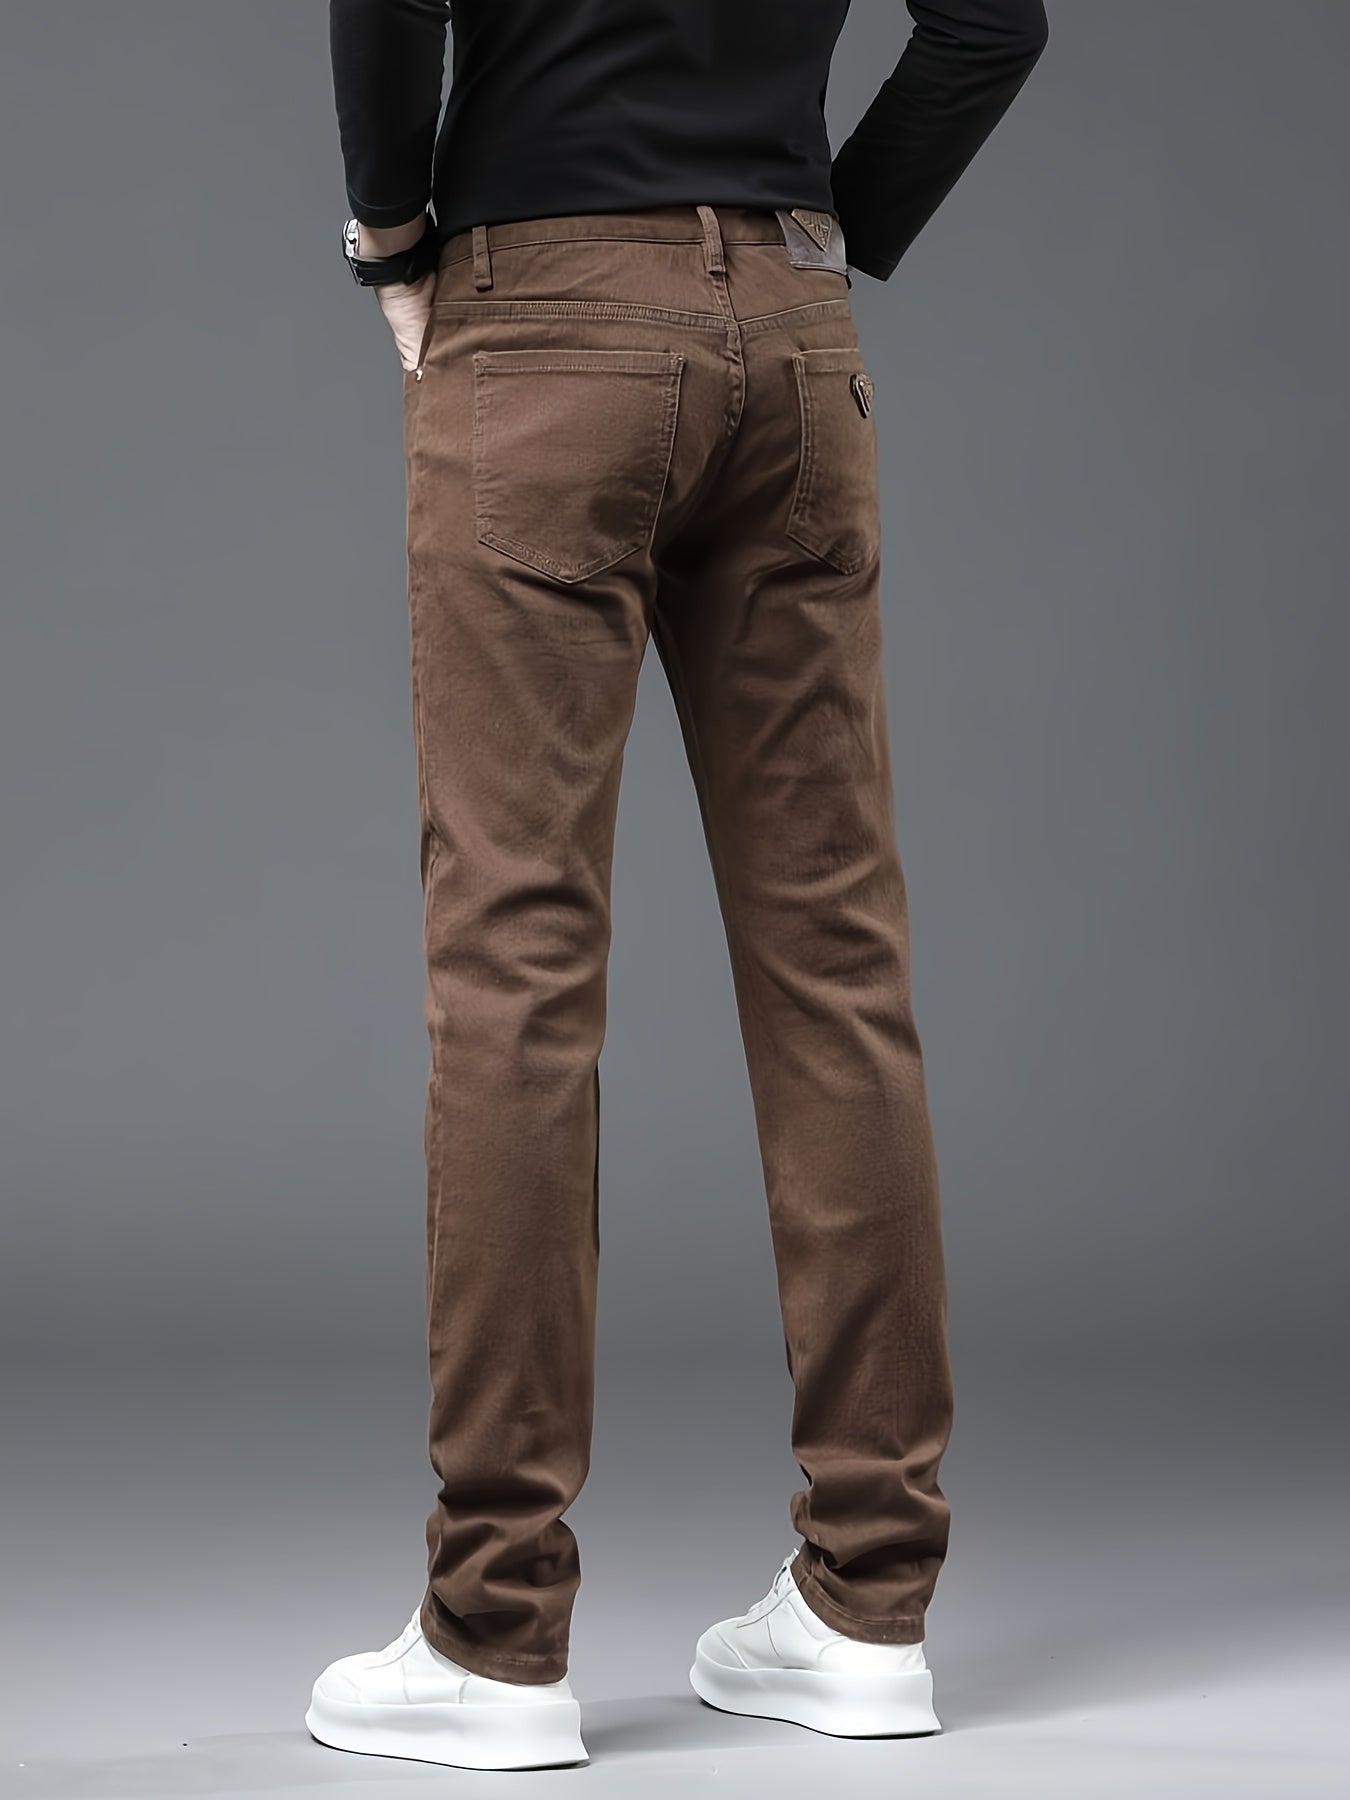 Men's Retro Semi-formal Jeans, Chic Classic Design Denim Pants For Business